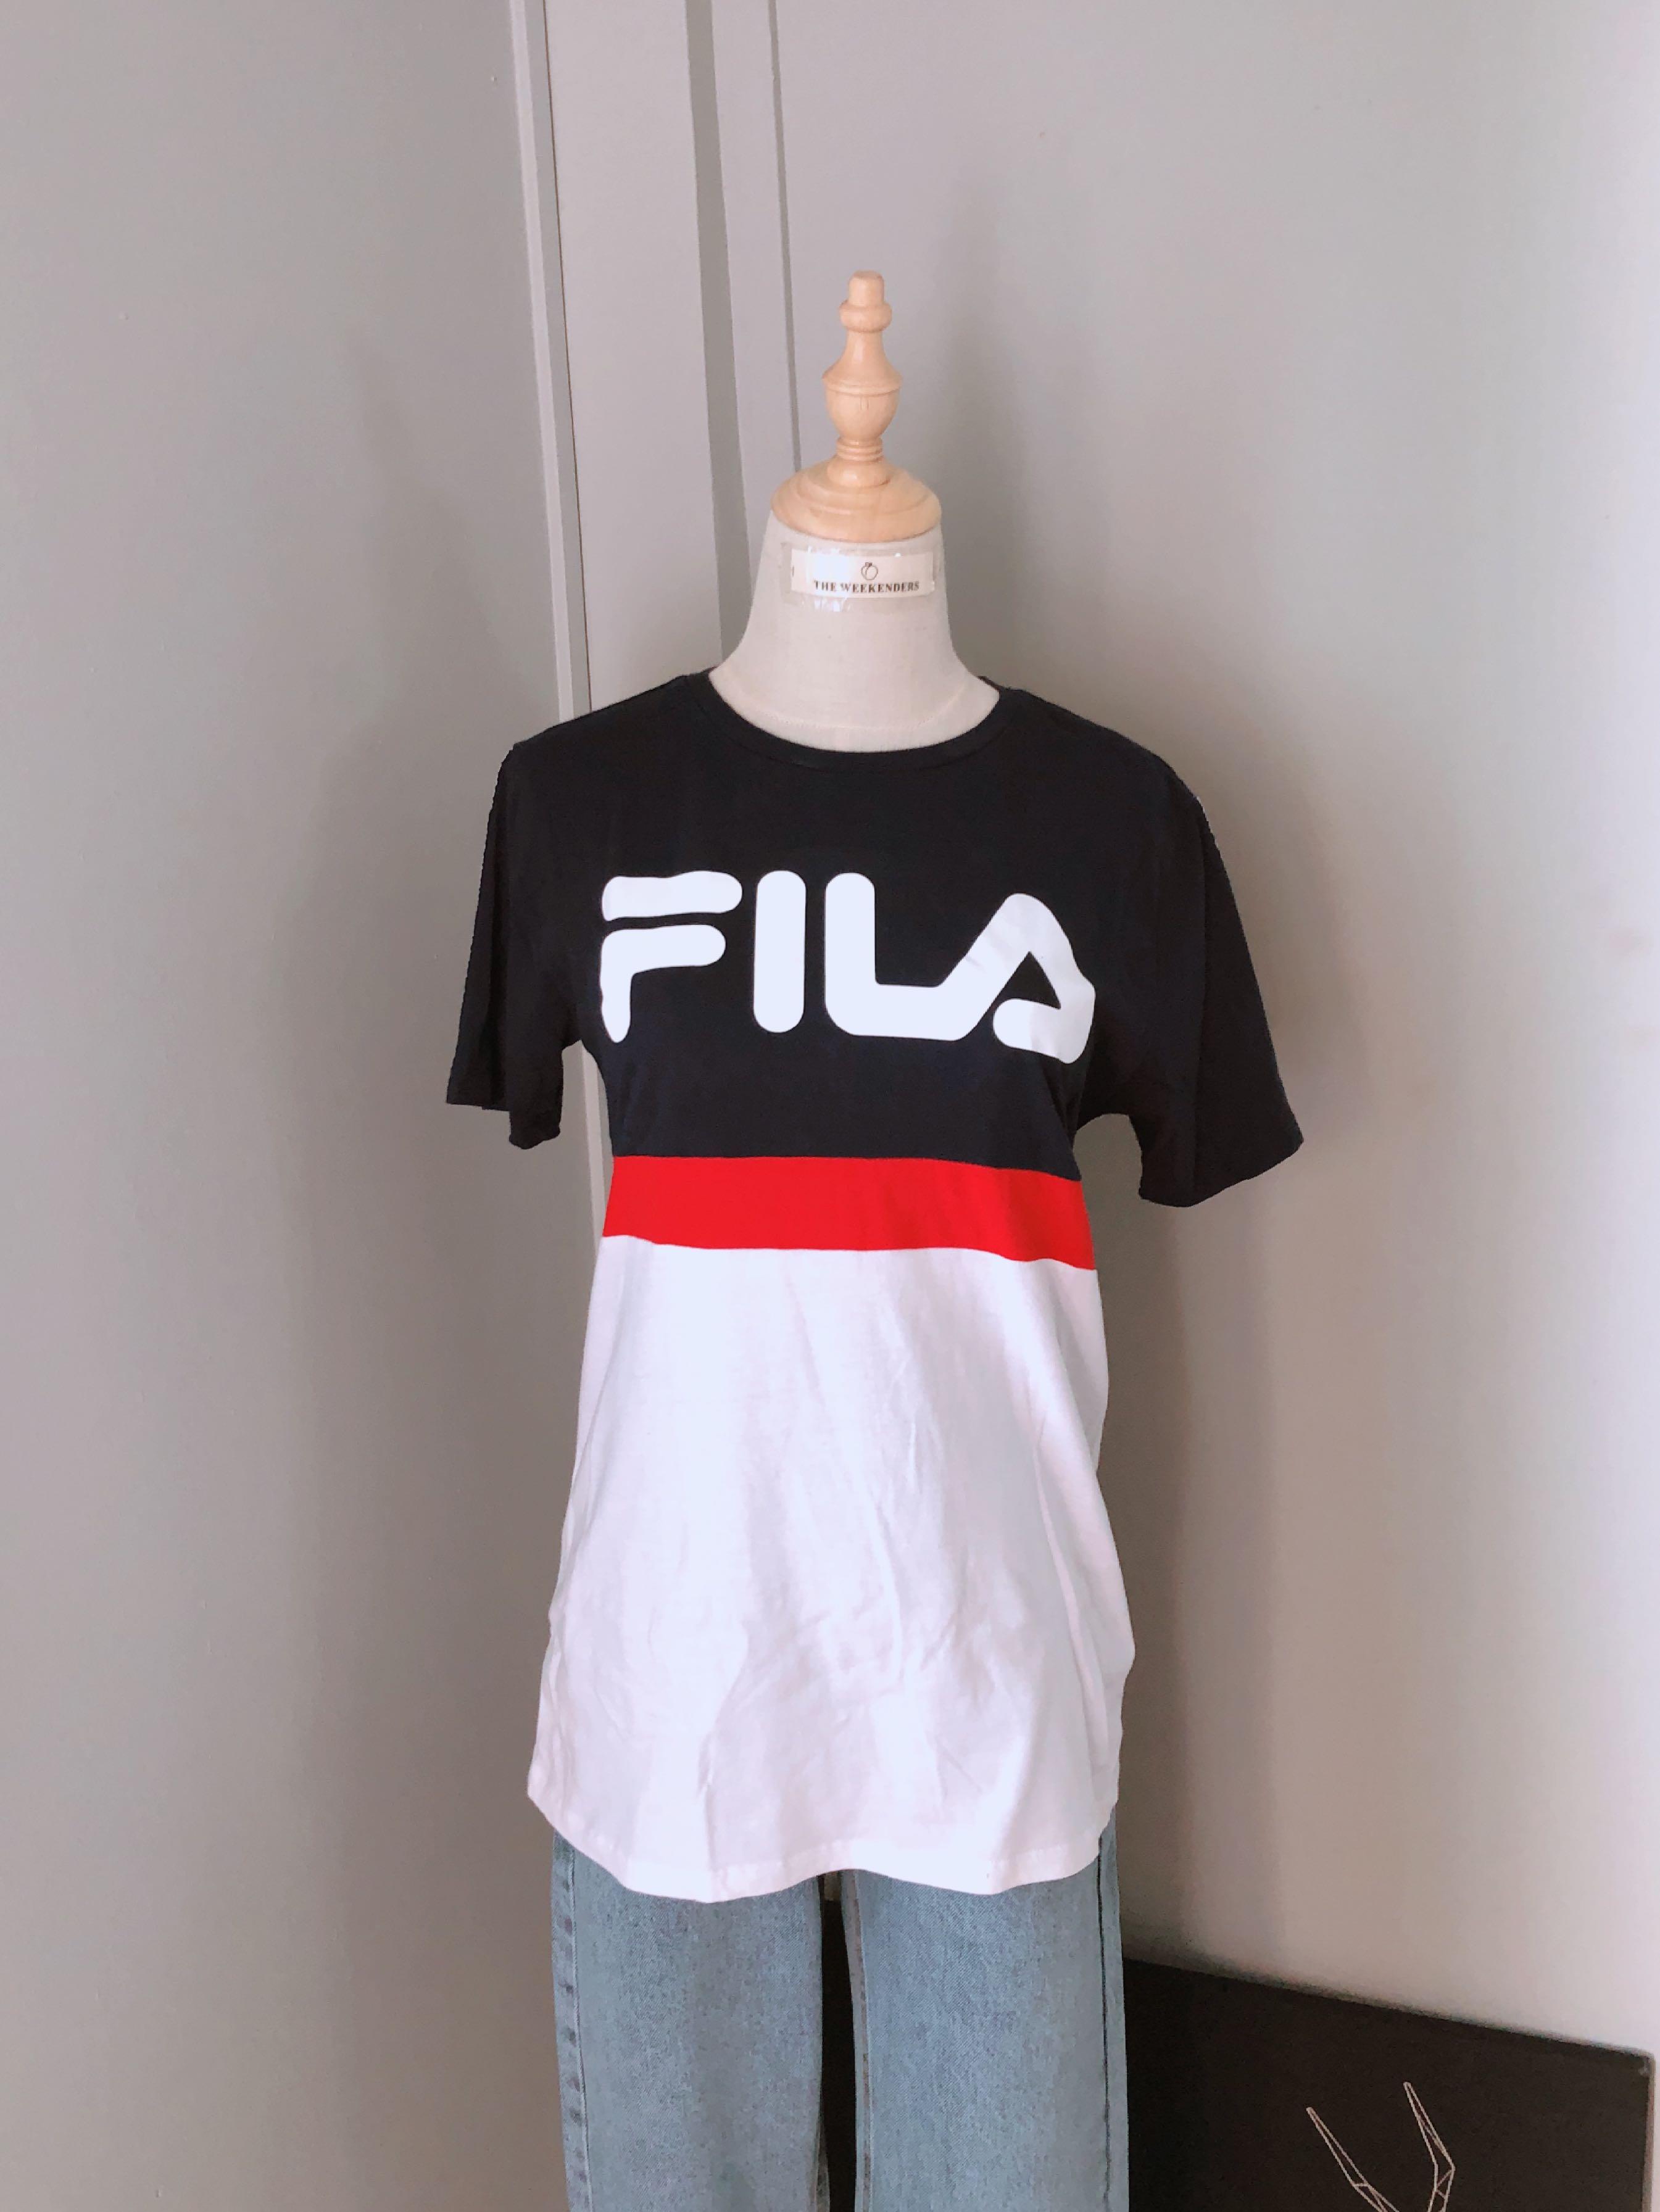 fila clothing clearance